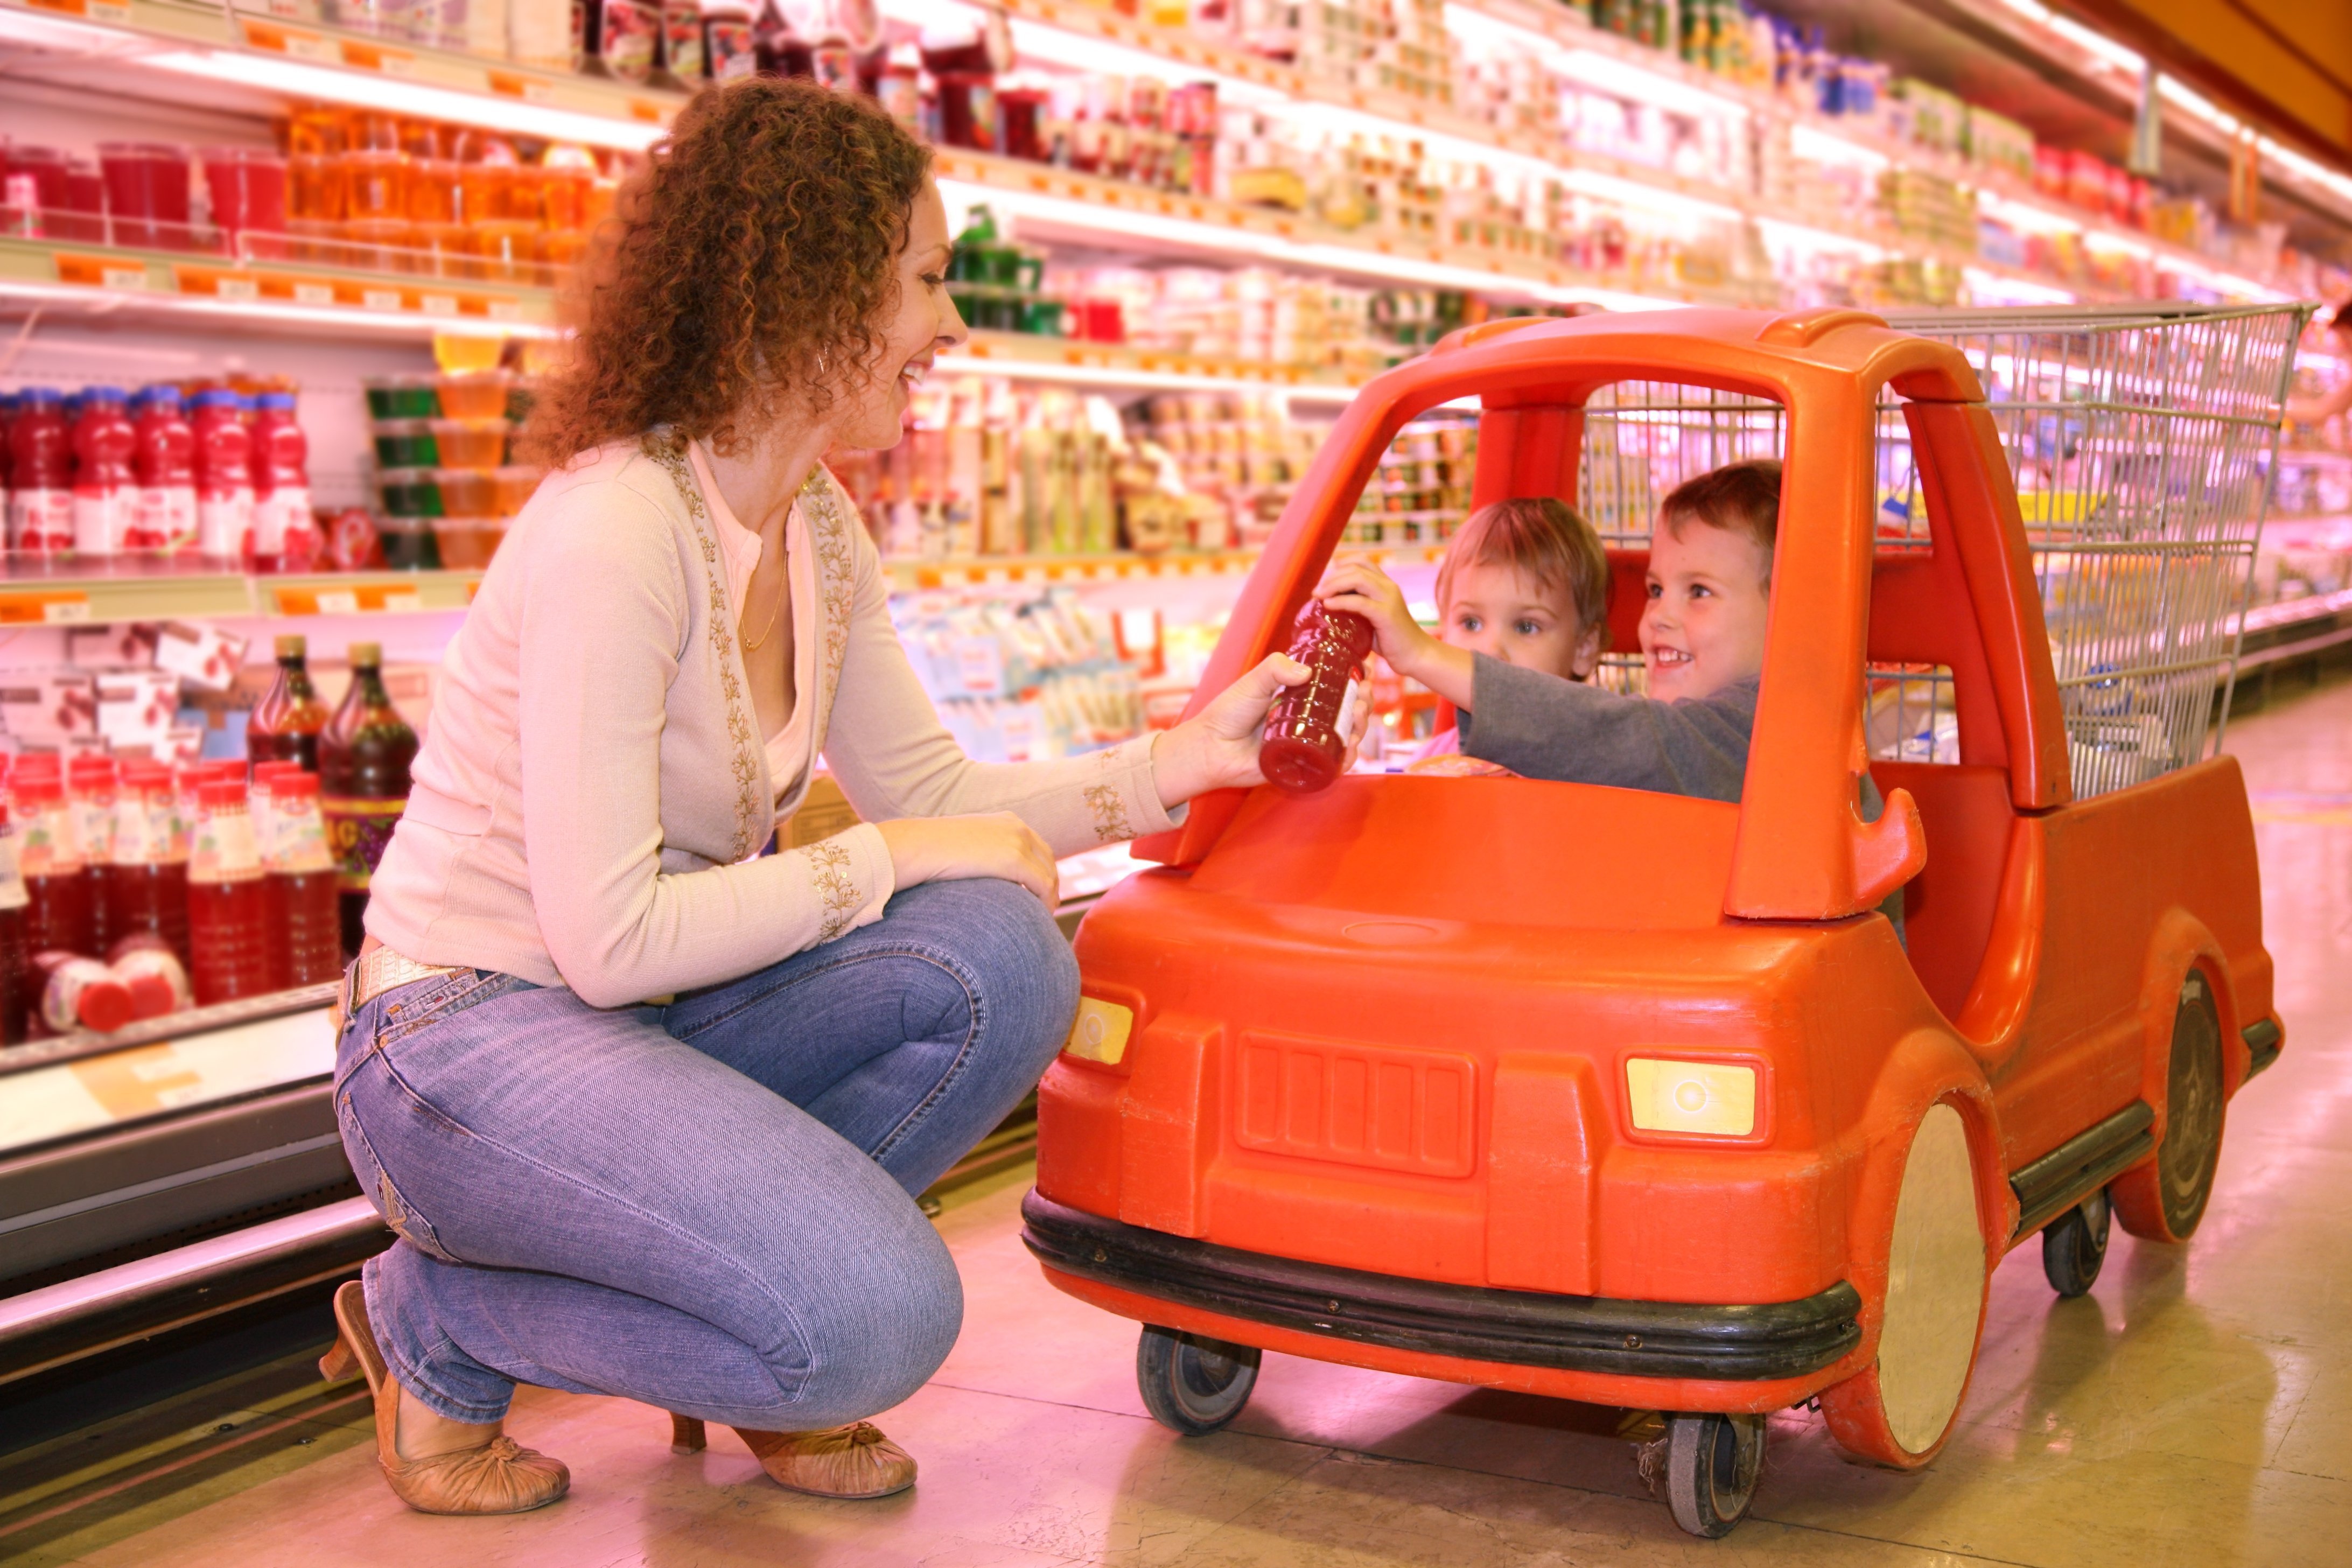 A woman handing a boy his fallen toy from the go-cart trolley. | Source: Shutterstock.